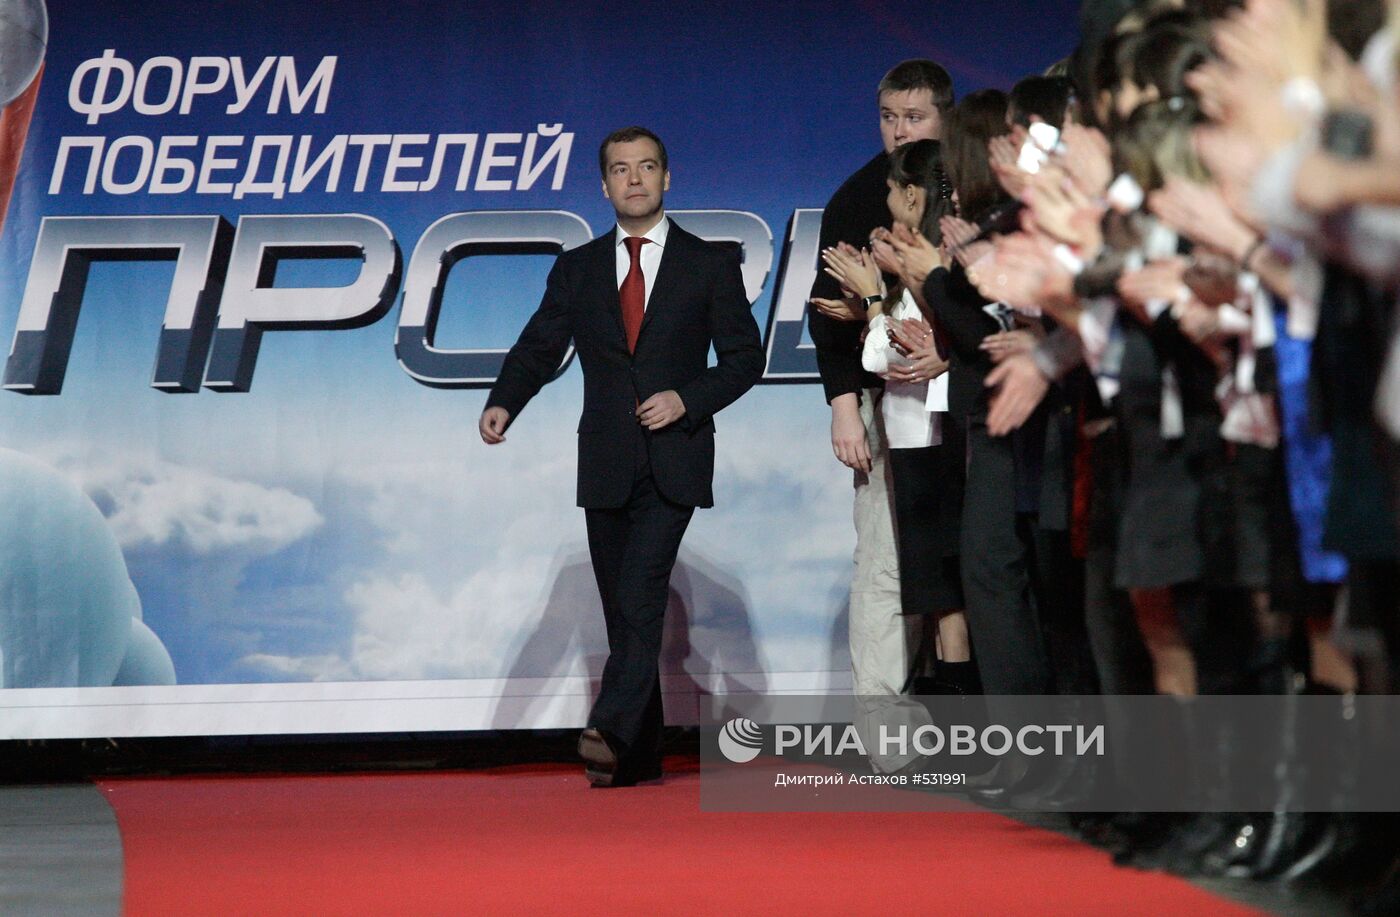 Президент РФ Д. Медведев на Форуме победителей "Прорыв"